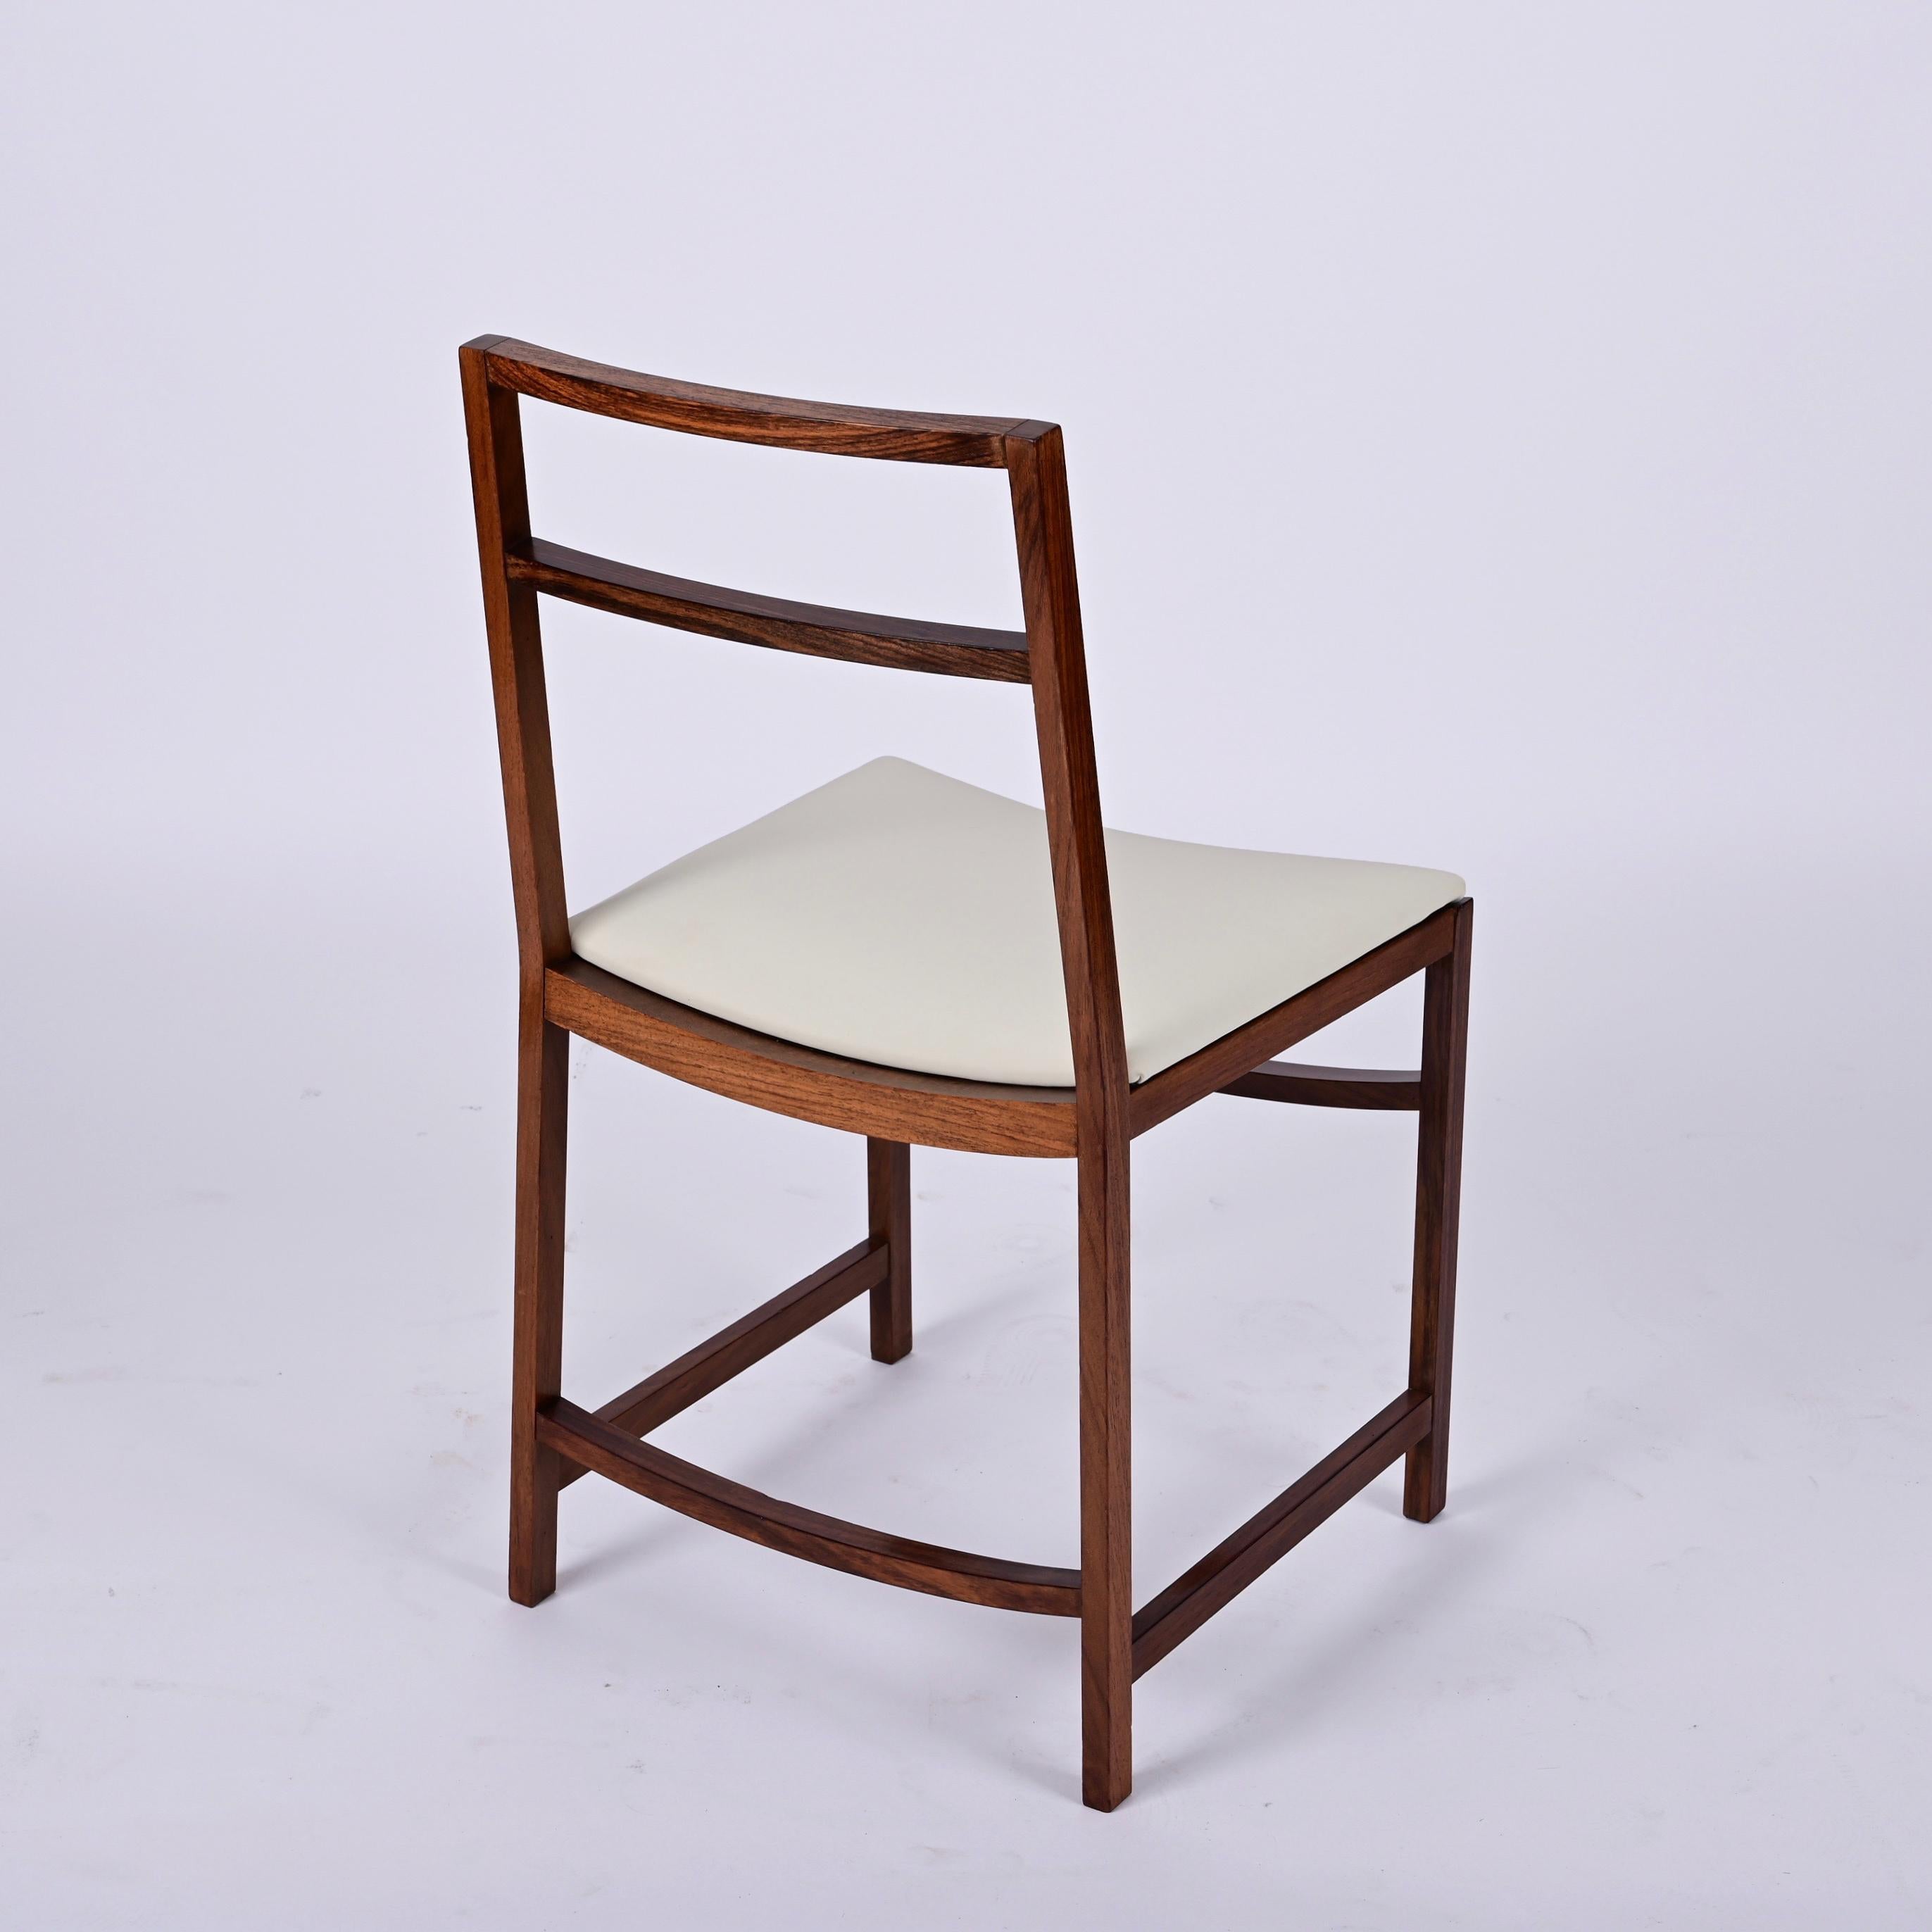 Midcentury Italian Dining Chairs in Teak, Renato Venturi for MIM Roma, 1960s For Sale 9